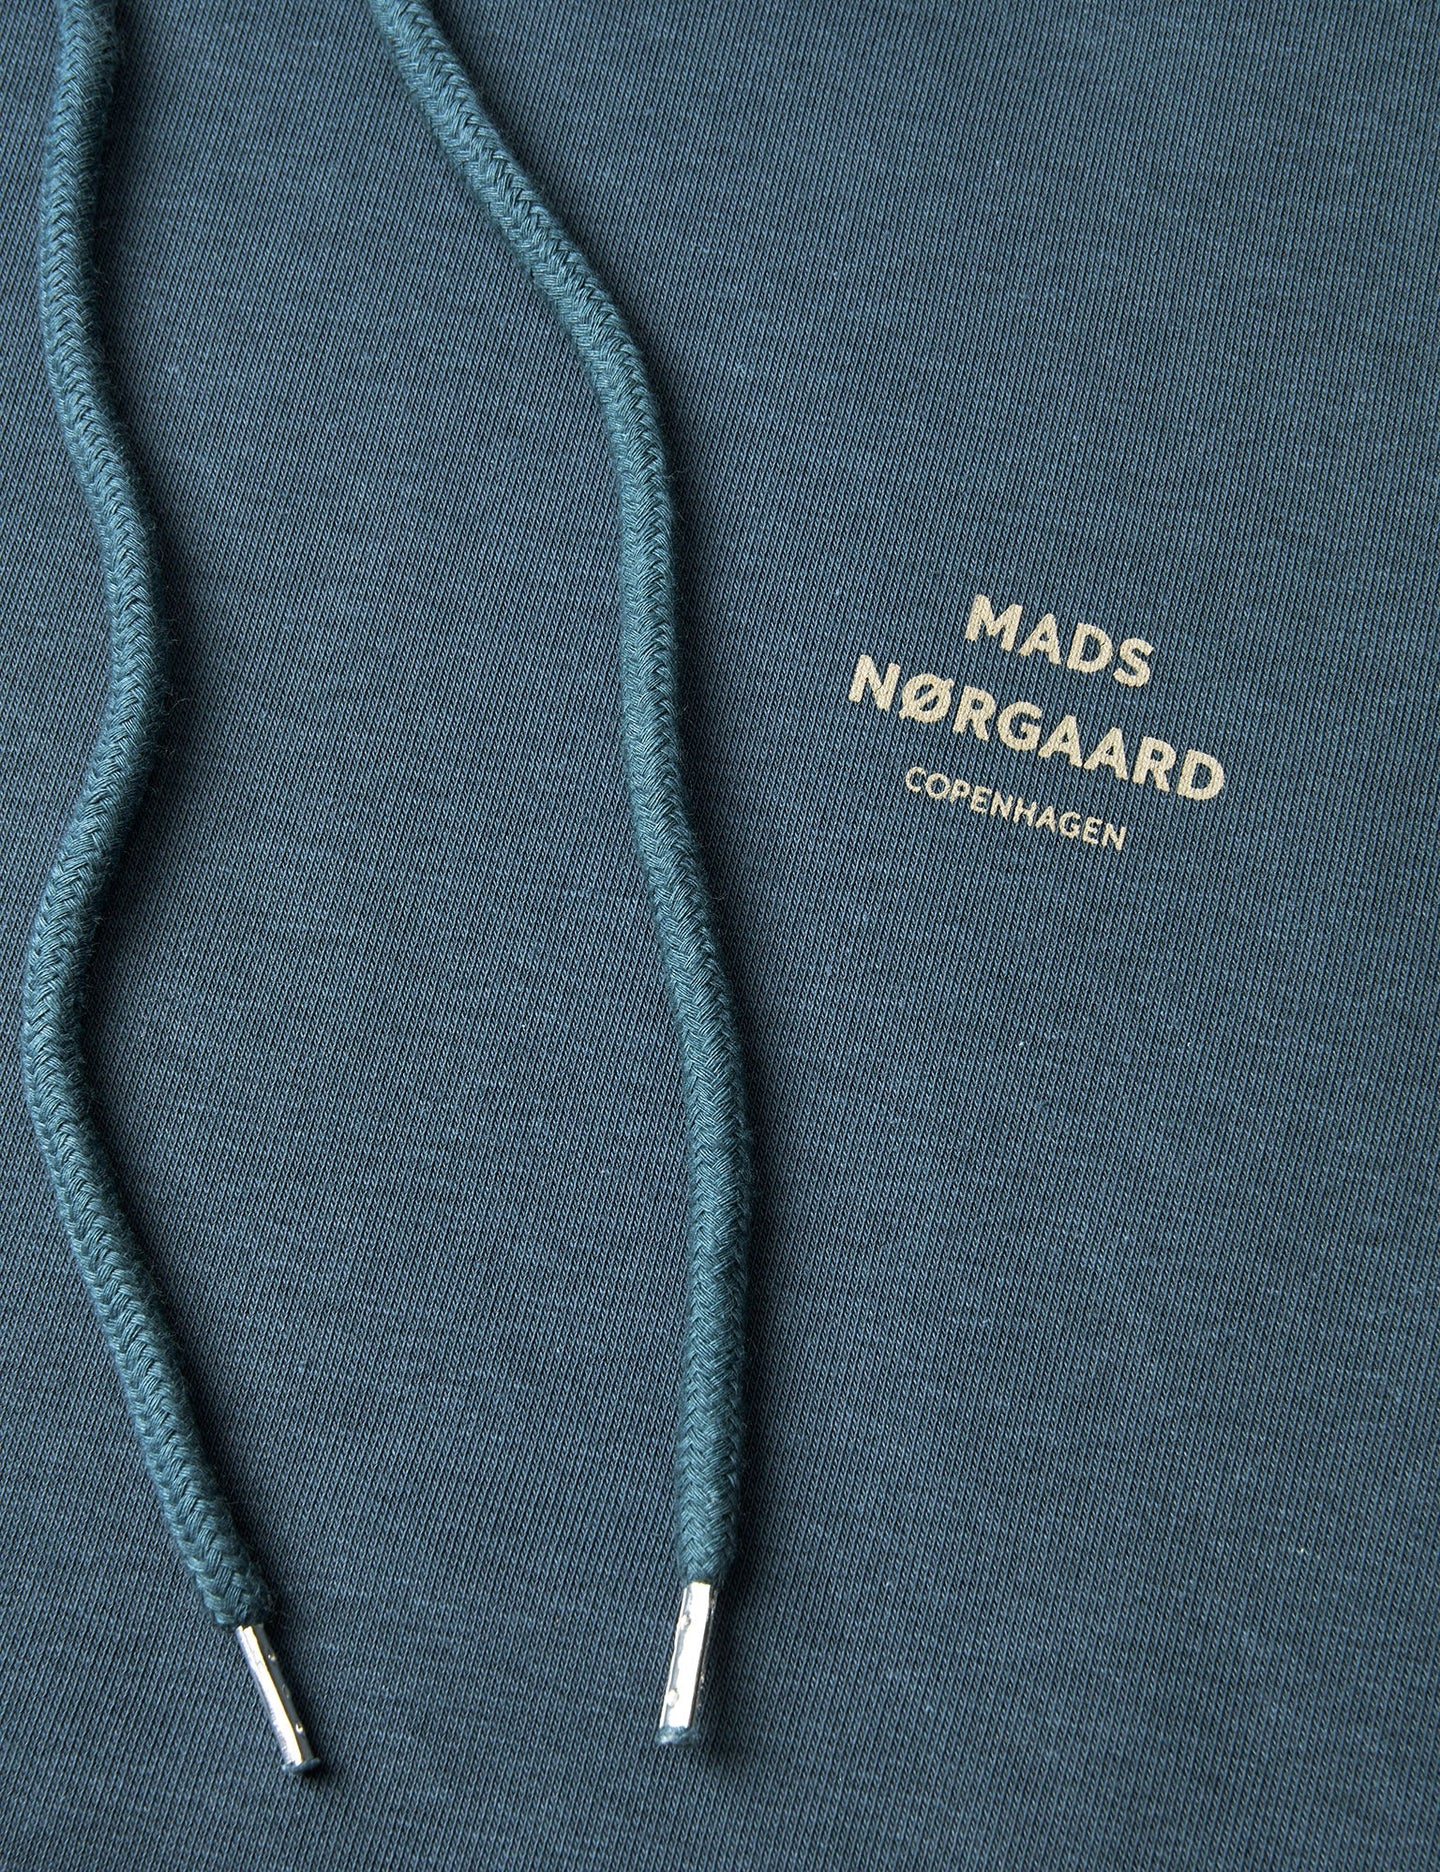 Mads Norgaard Hoodie Logo Sweat Donkerblauw Heren